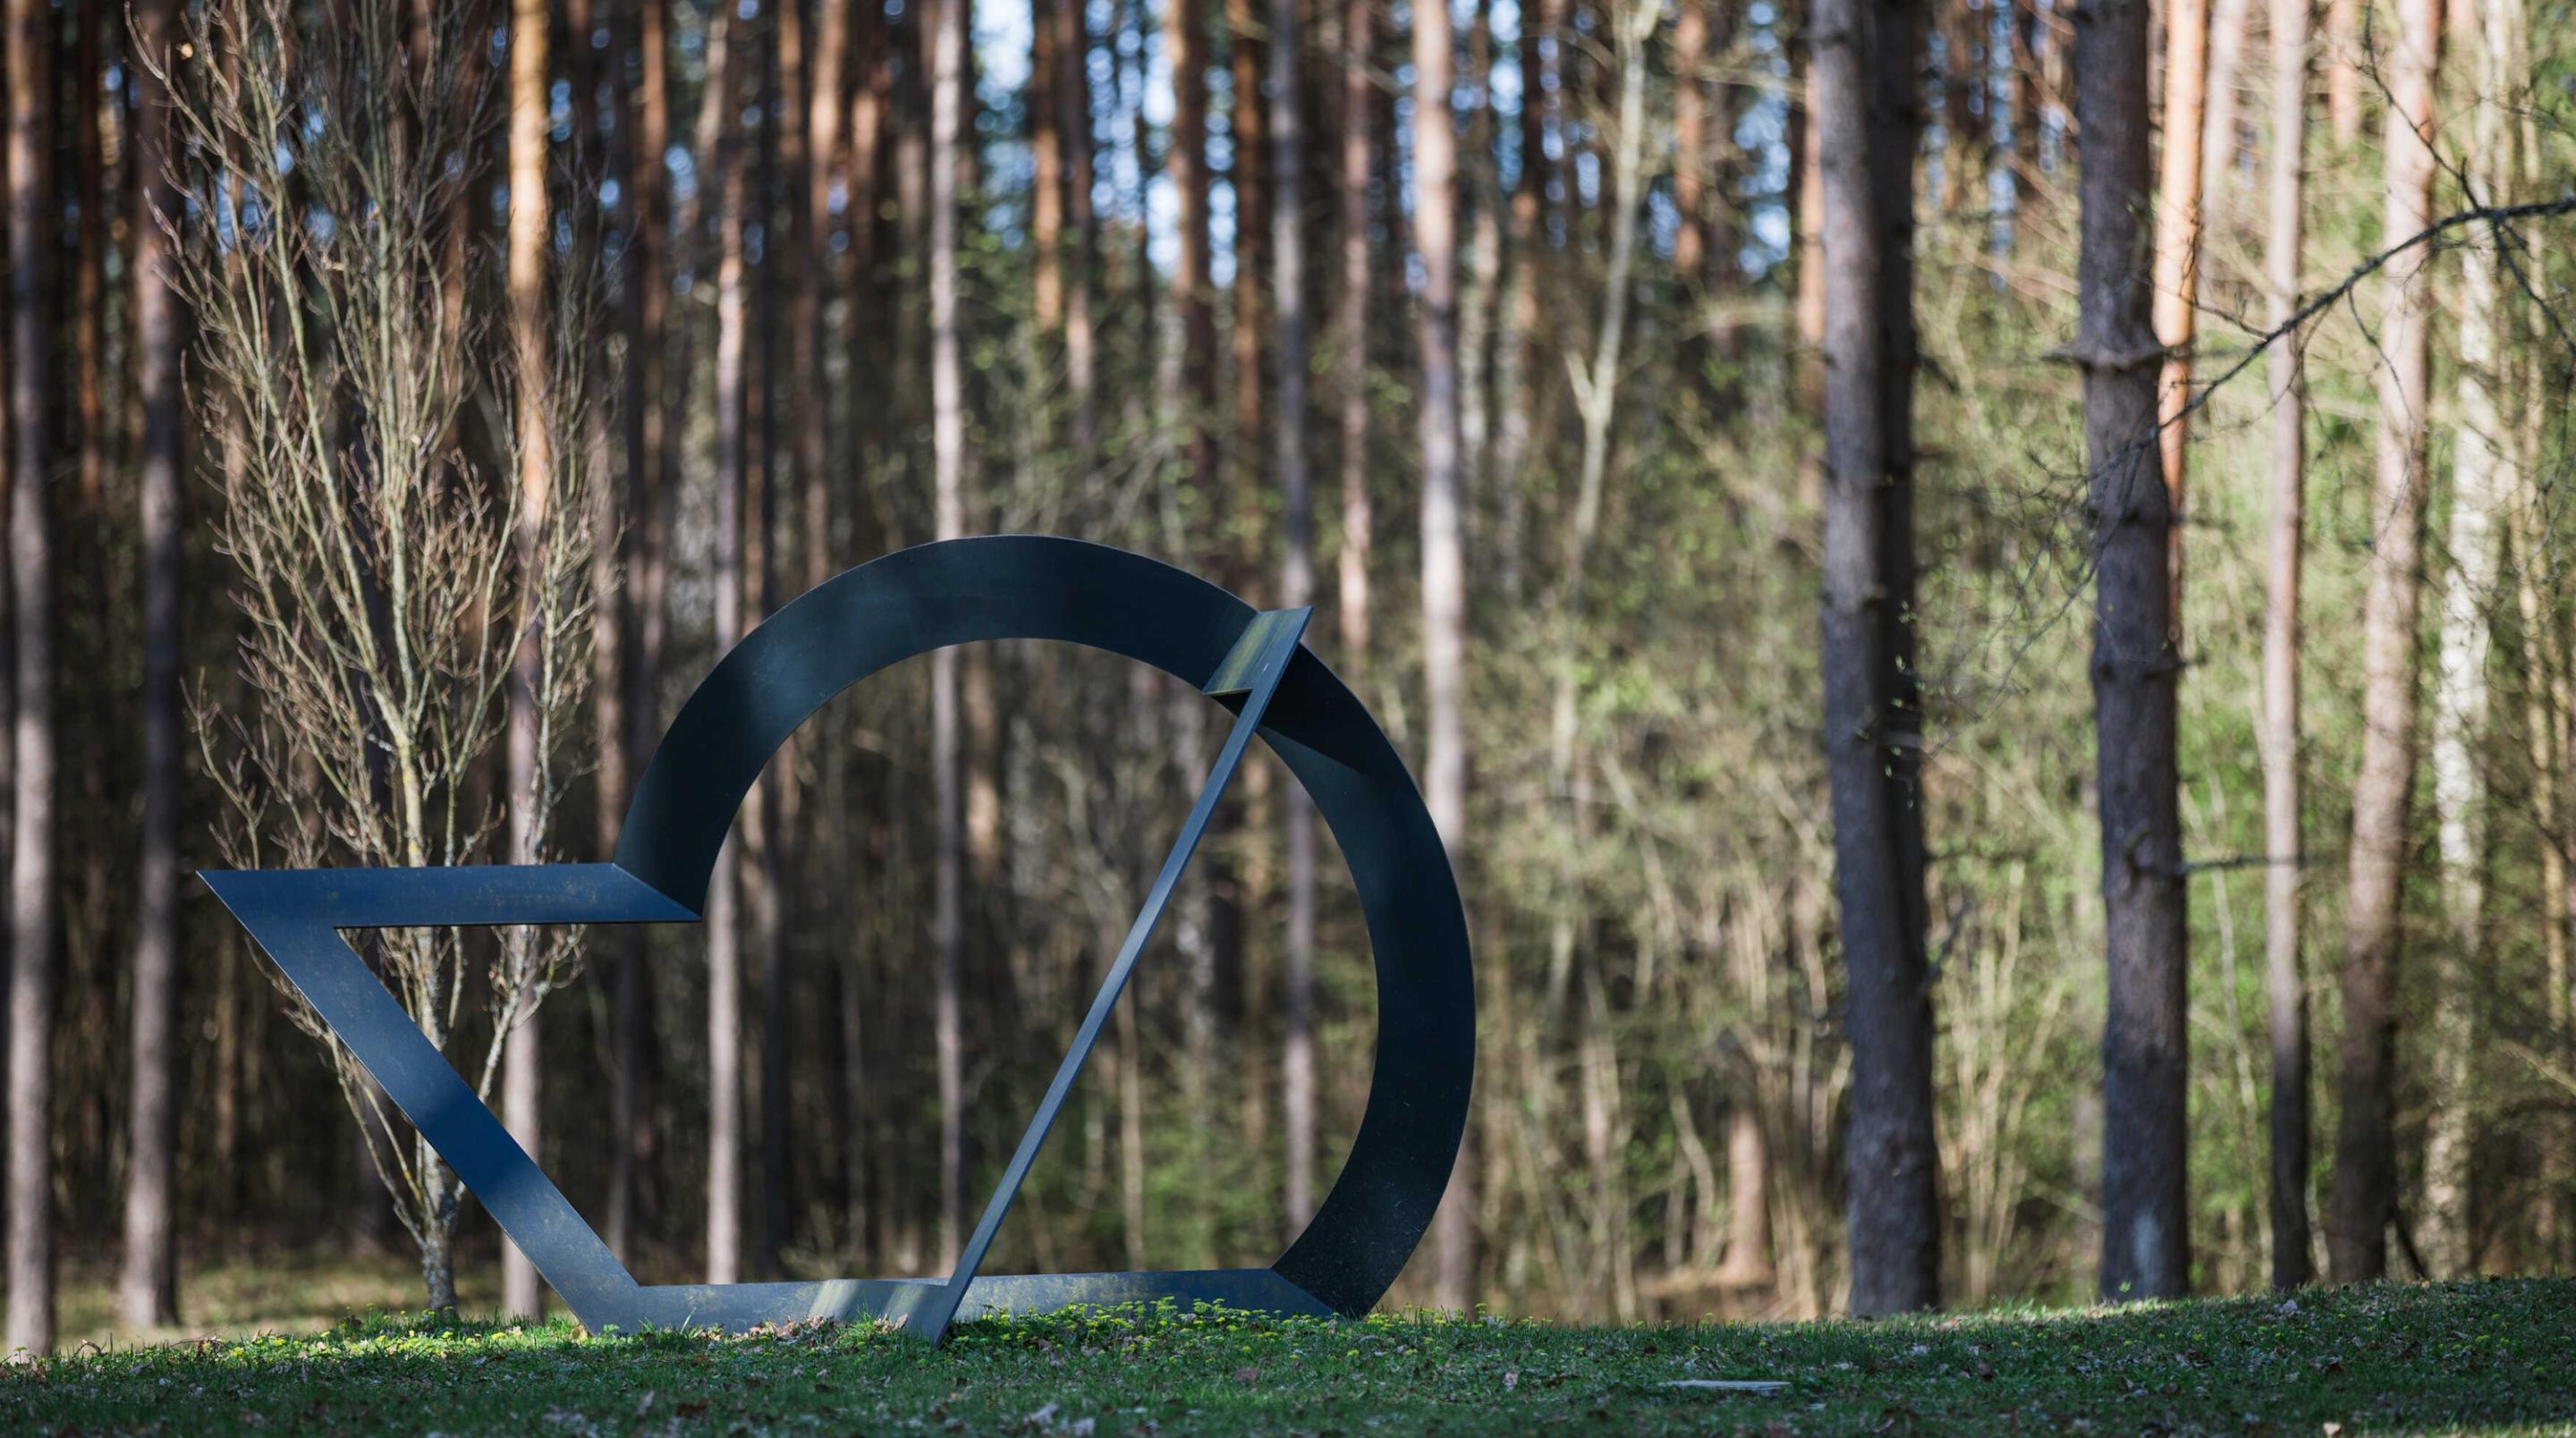 Europos Parkas Makoto Ito kūrinys „Sraigė“  